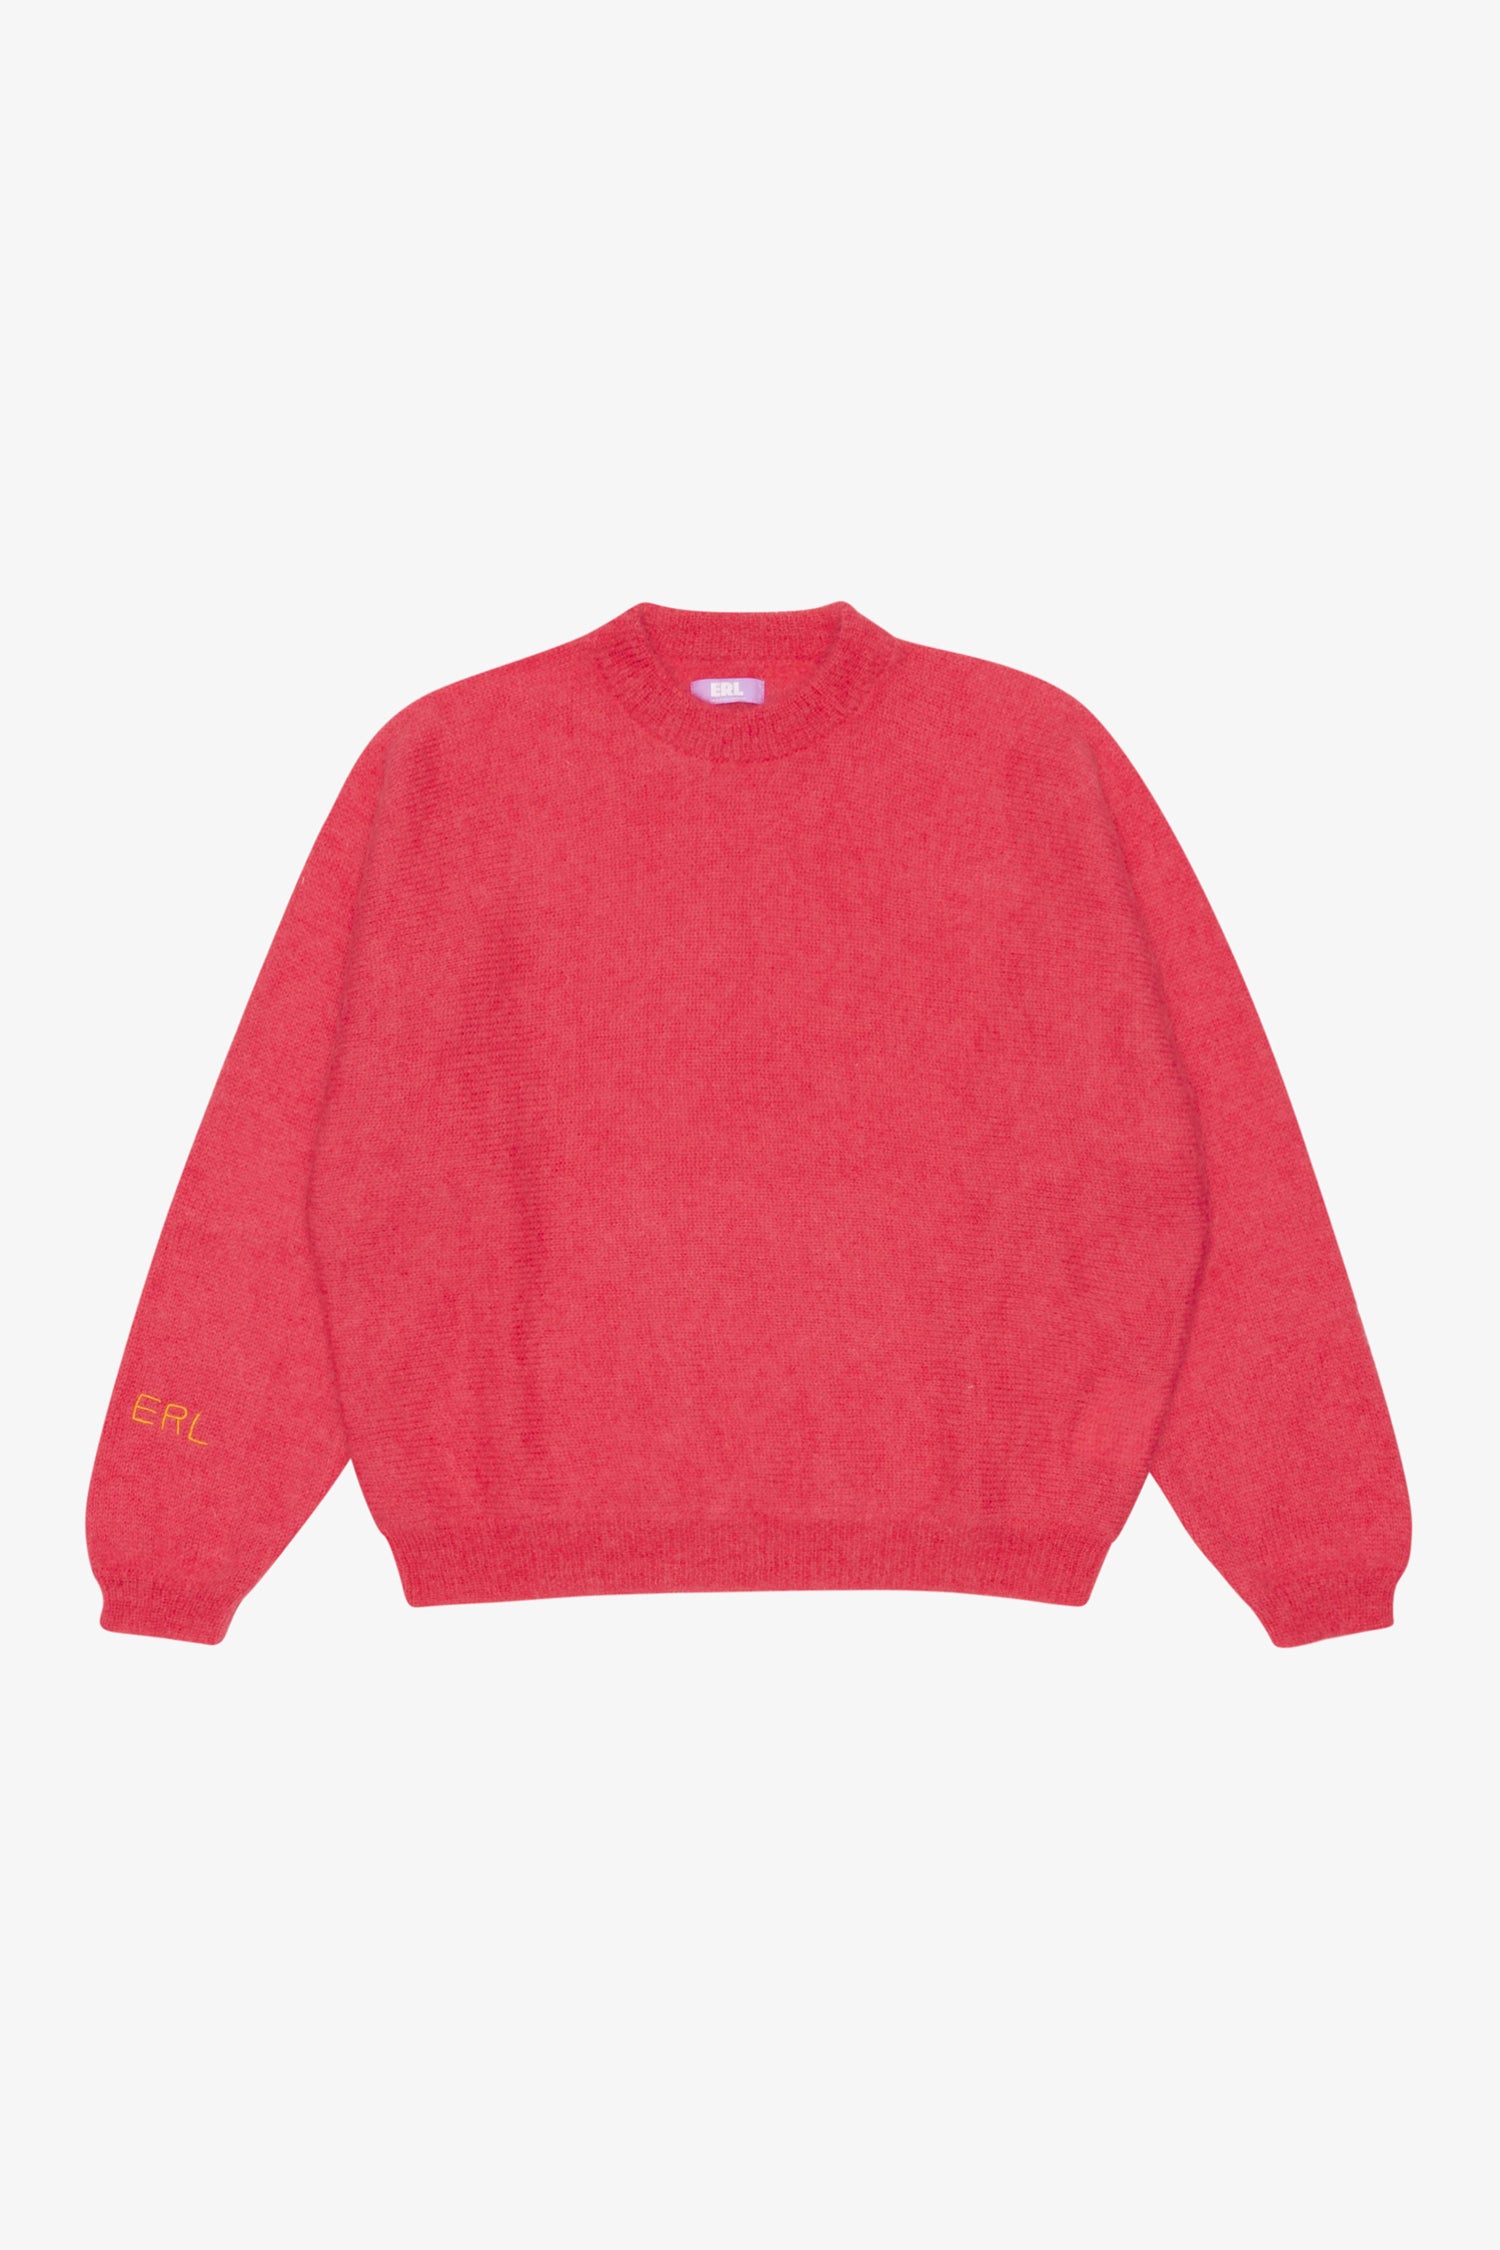 Selectshop FRAME - ERL Loose-Knit Jumper Sweatshirts Dubai